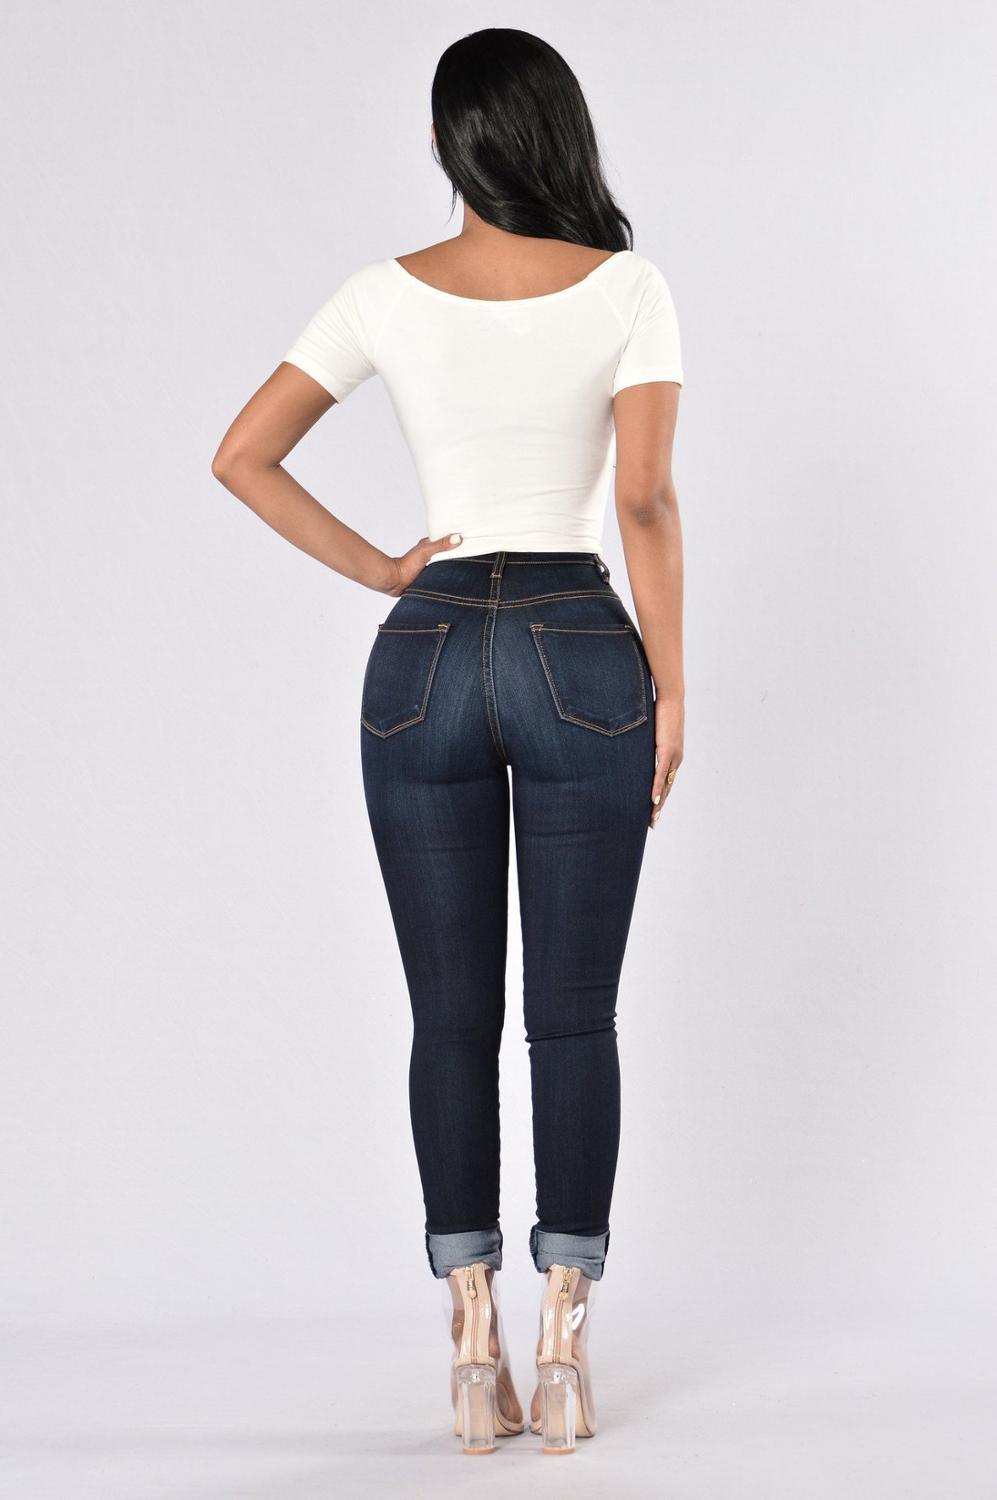 Buy Women's Plus Size Pants - Ripped Jeans at LeStyleParfait Kenya